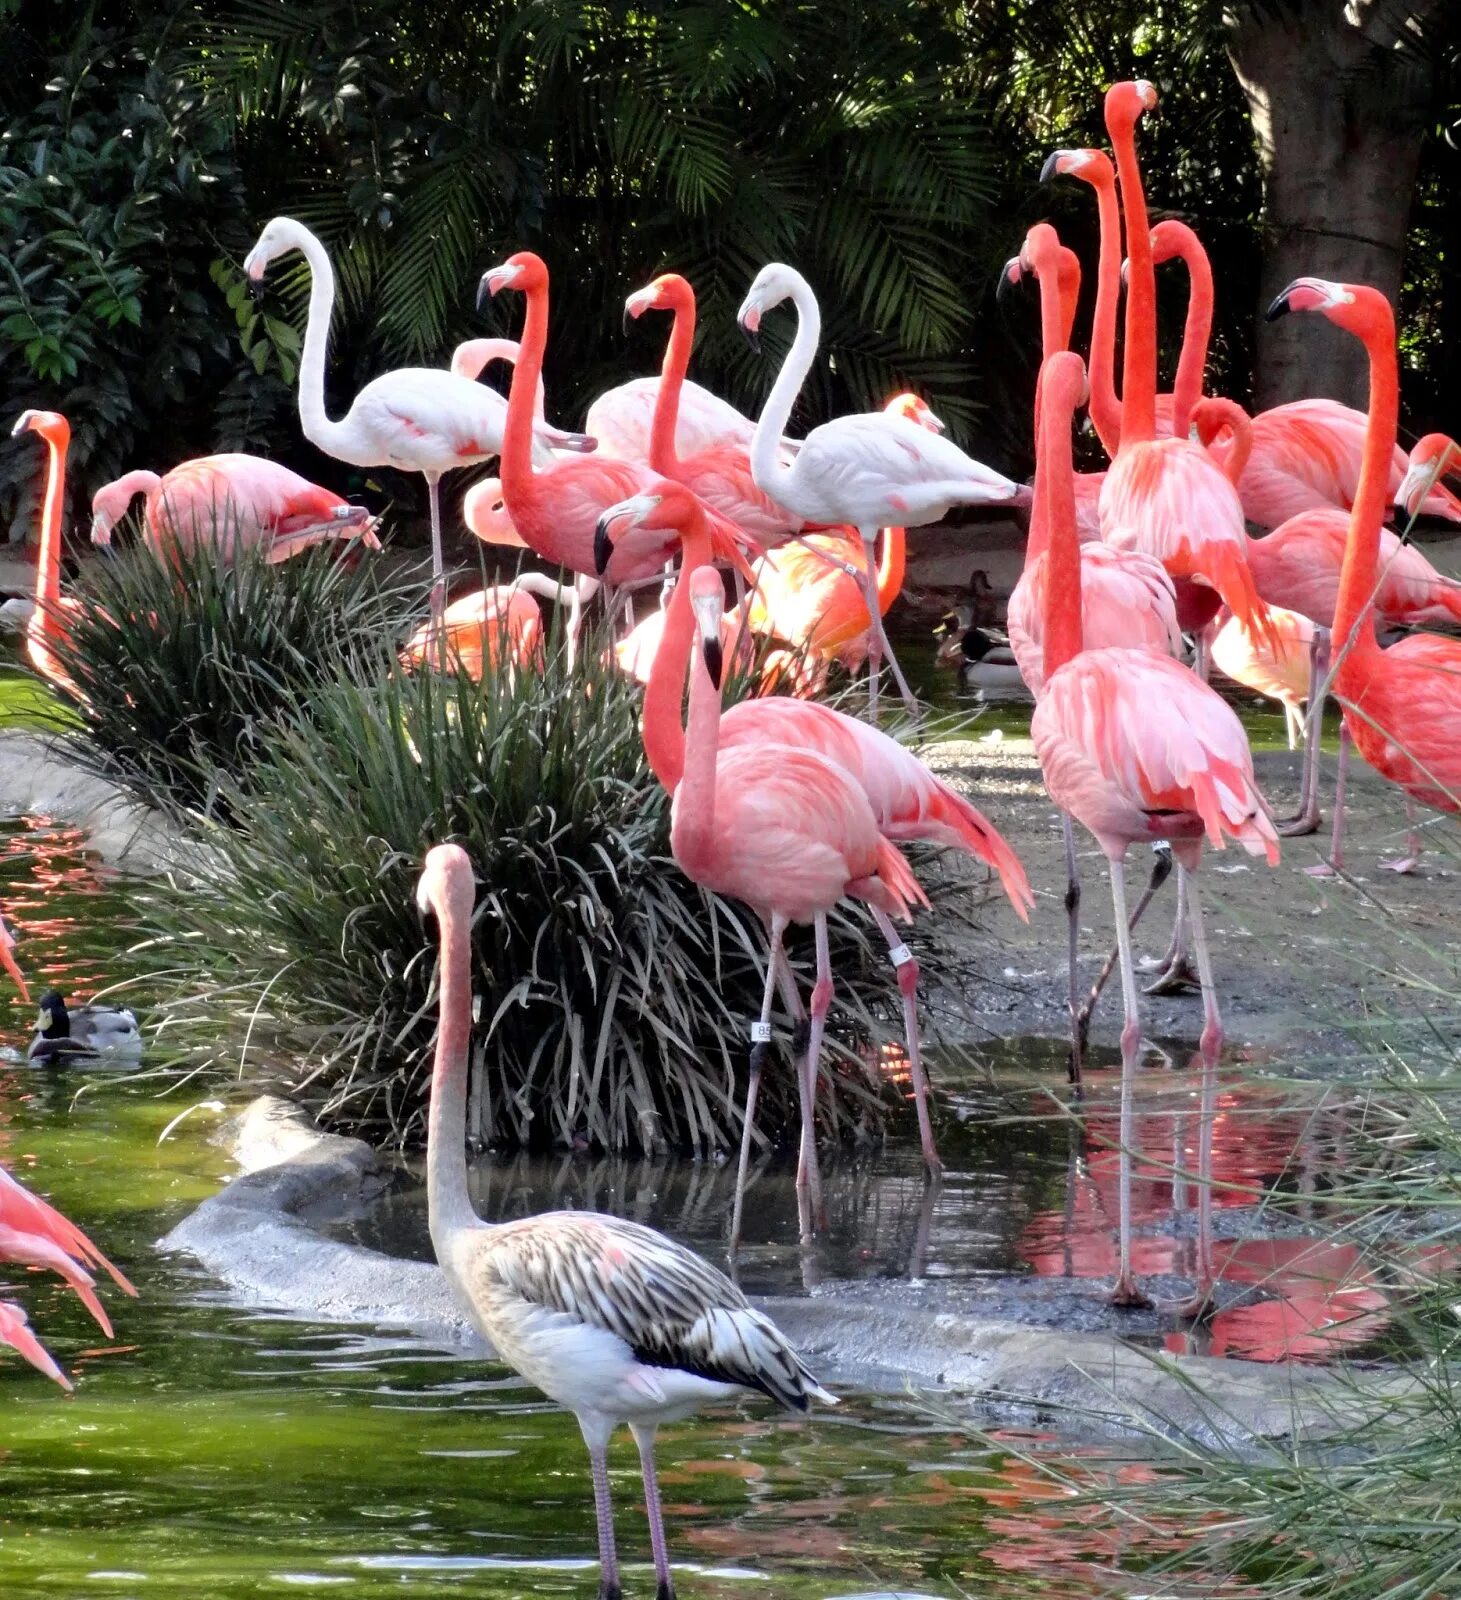 Фламинго в Южной Америке. Доминикана Фламинго. Фламинго в Северной Америке. Фламинго в Испании. Красив фламинго